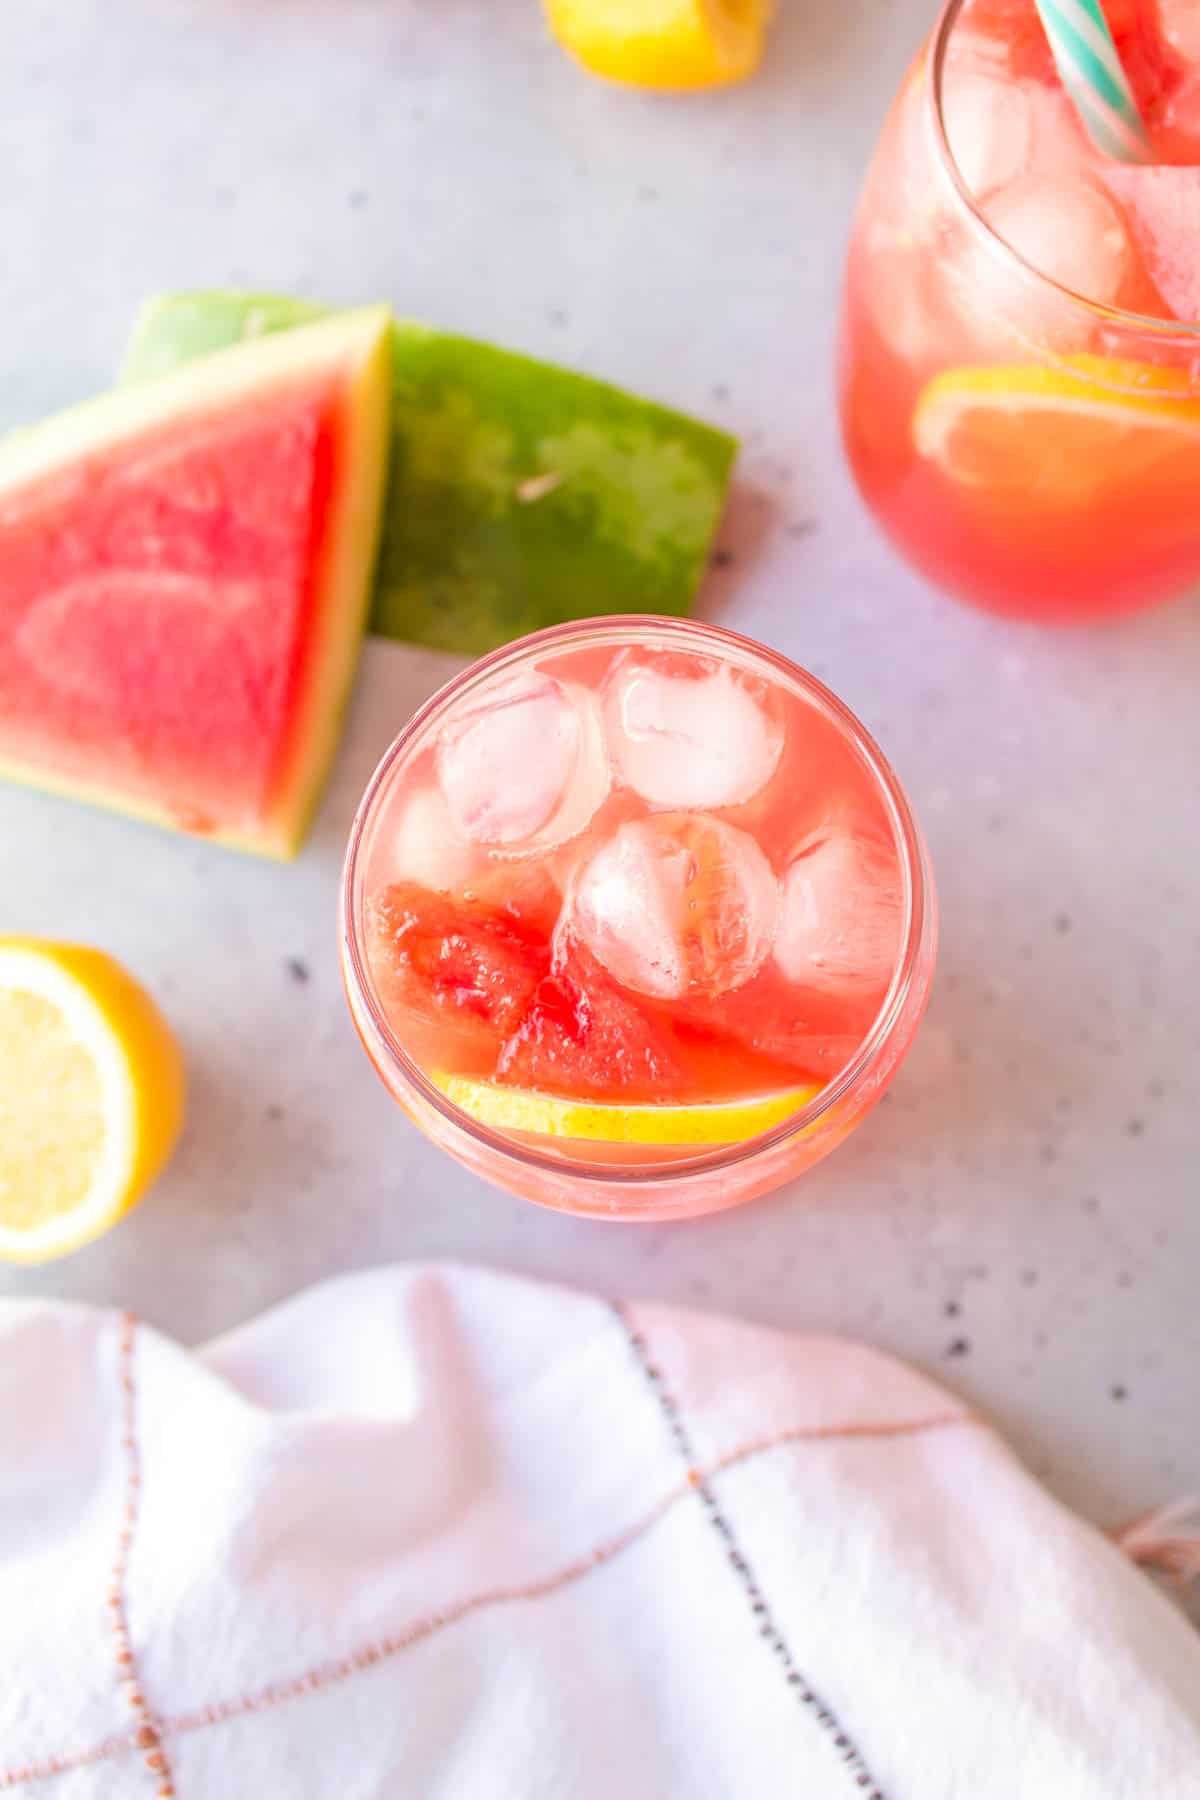 An overhead image of a glass of watermelon lemonade.